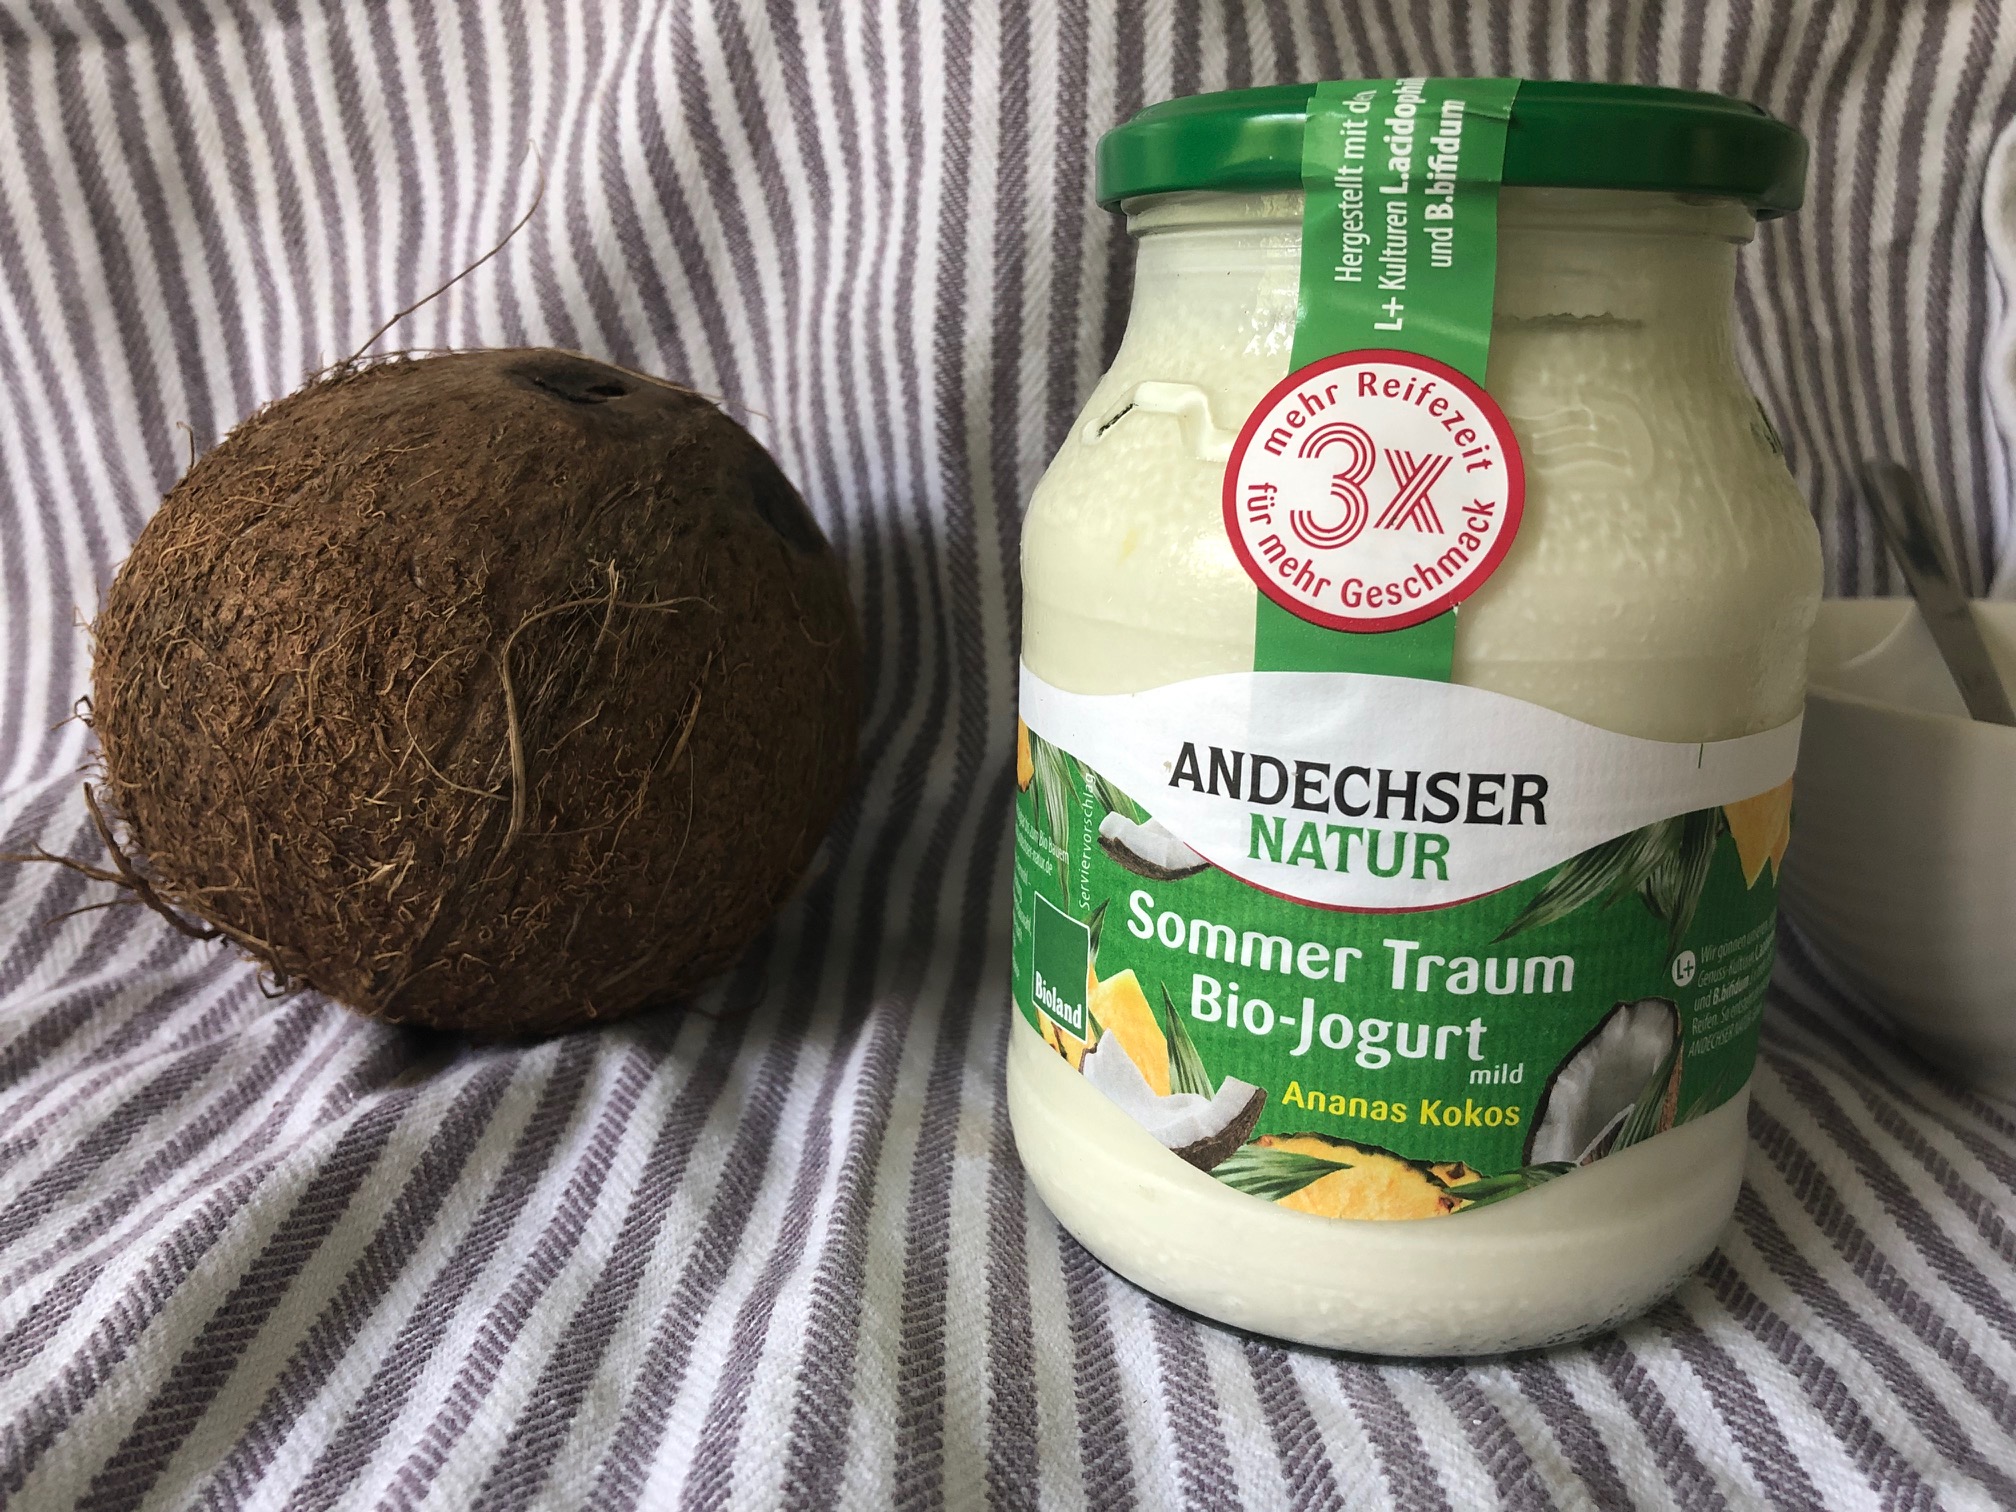 Andechser Natur - Bio-Joghurt Sommer Traum Ananas & Kokos